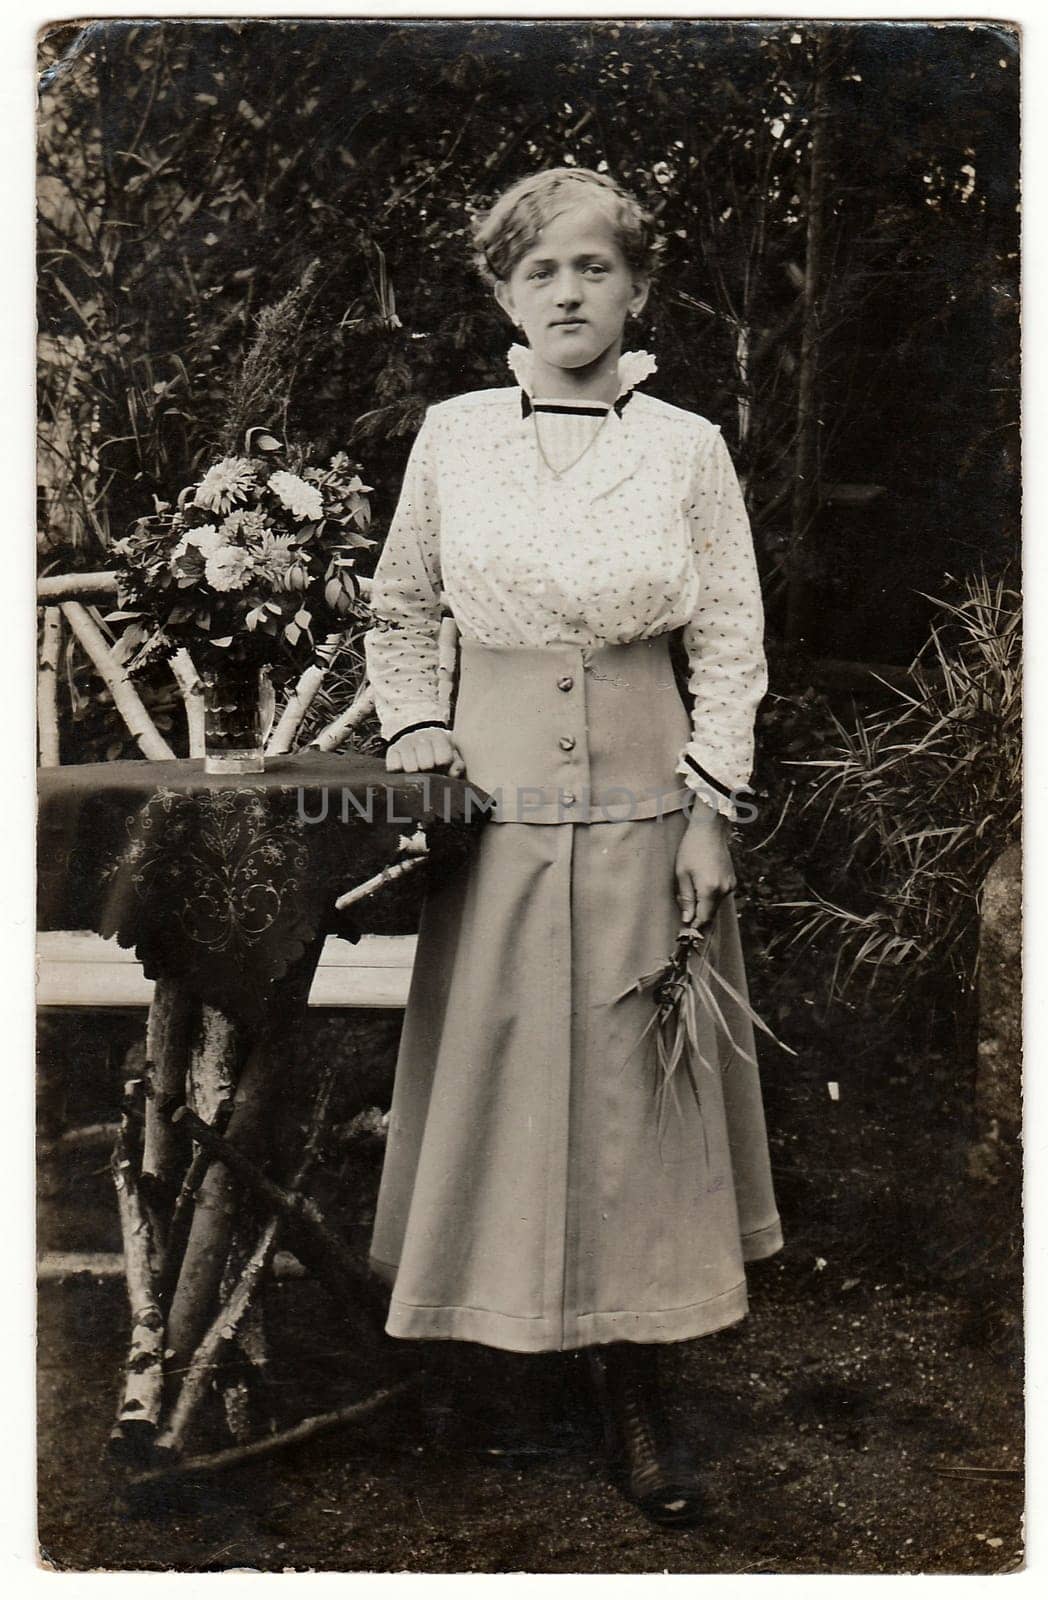 HEJNICE (HAINDORF), THE CZECHOSLOVAK REPUBLIC - CIRCA 1940s: Vintage photo shows an elegant woman poses next to a rustic garden table. Black white antique photo.